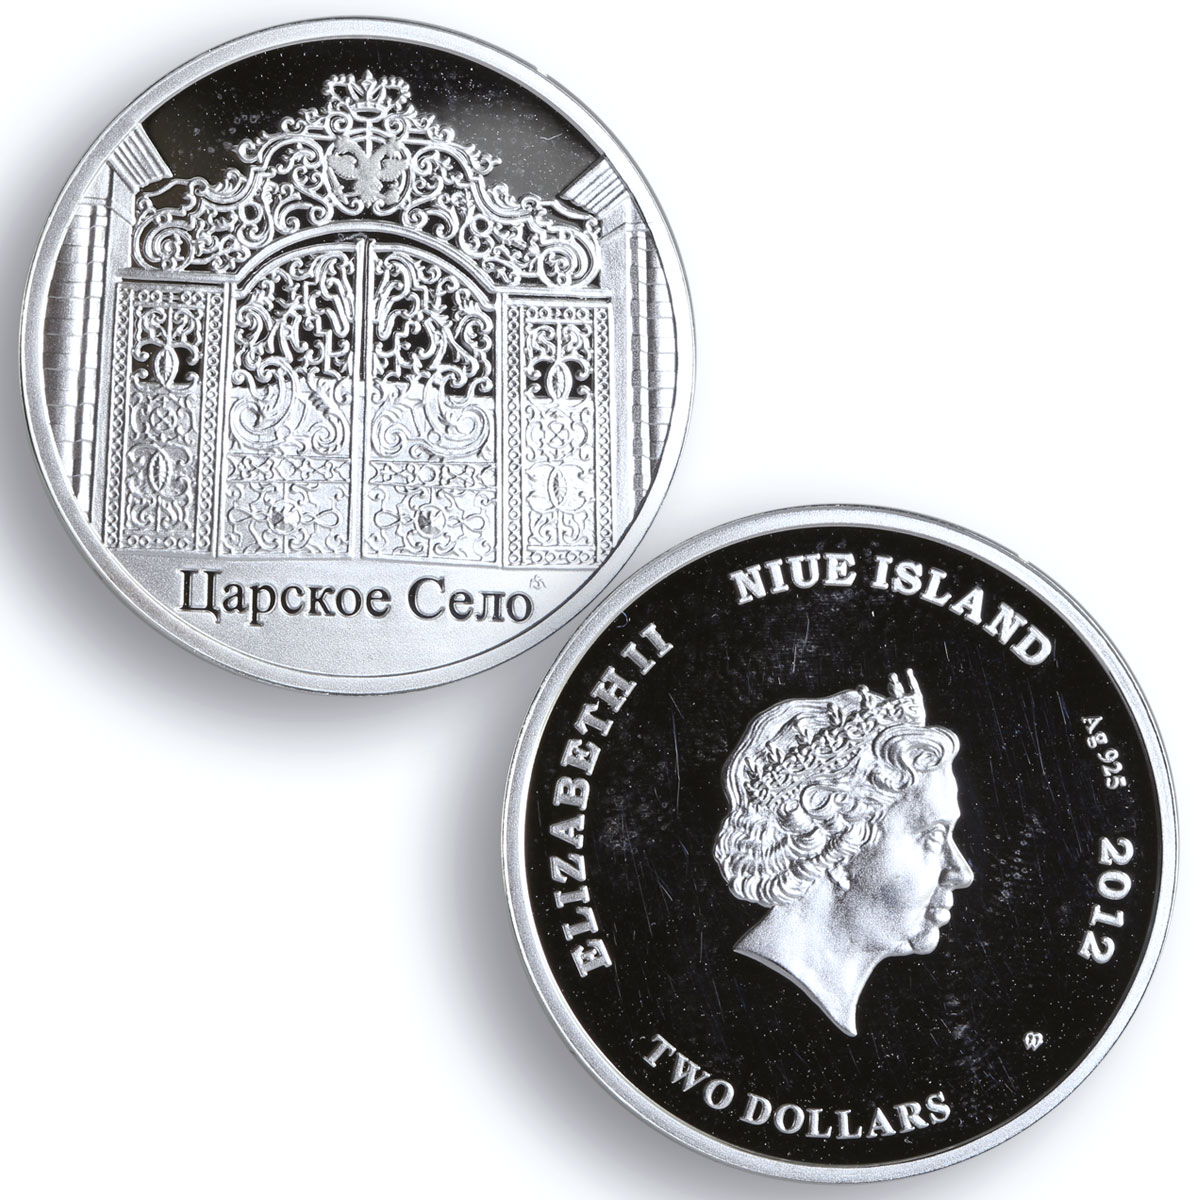 Niue set of 5 coins Emperors Residence Tsarskoye Selo proof silver coins 2012